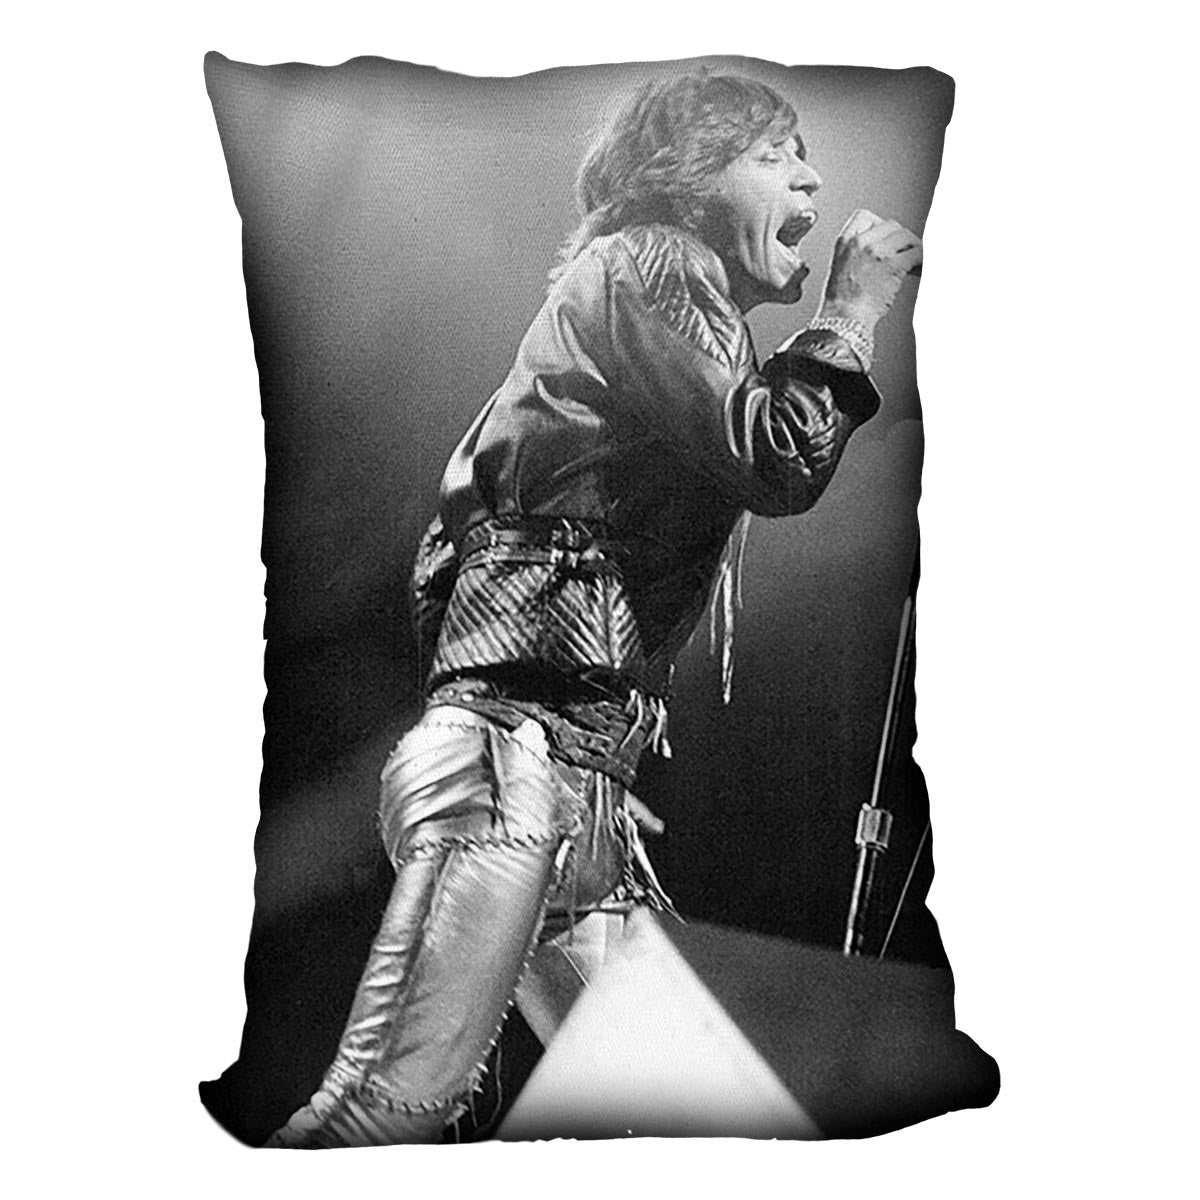 Mick Jagger 1973 Cushion